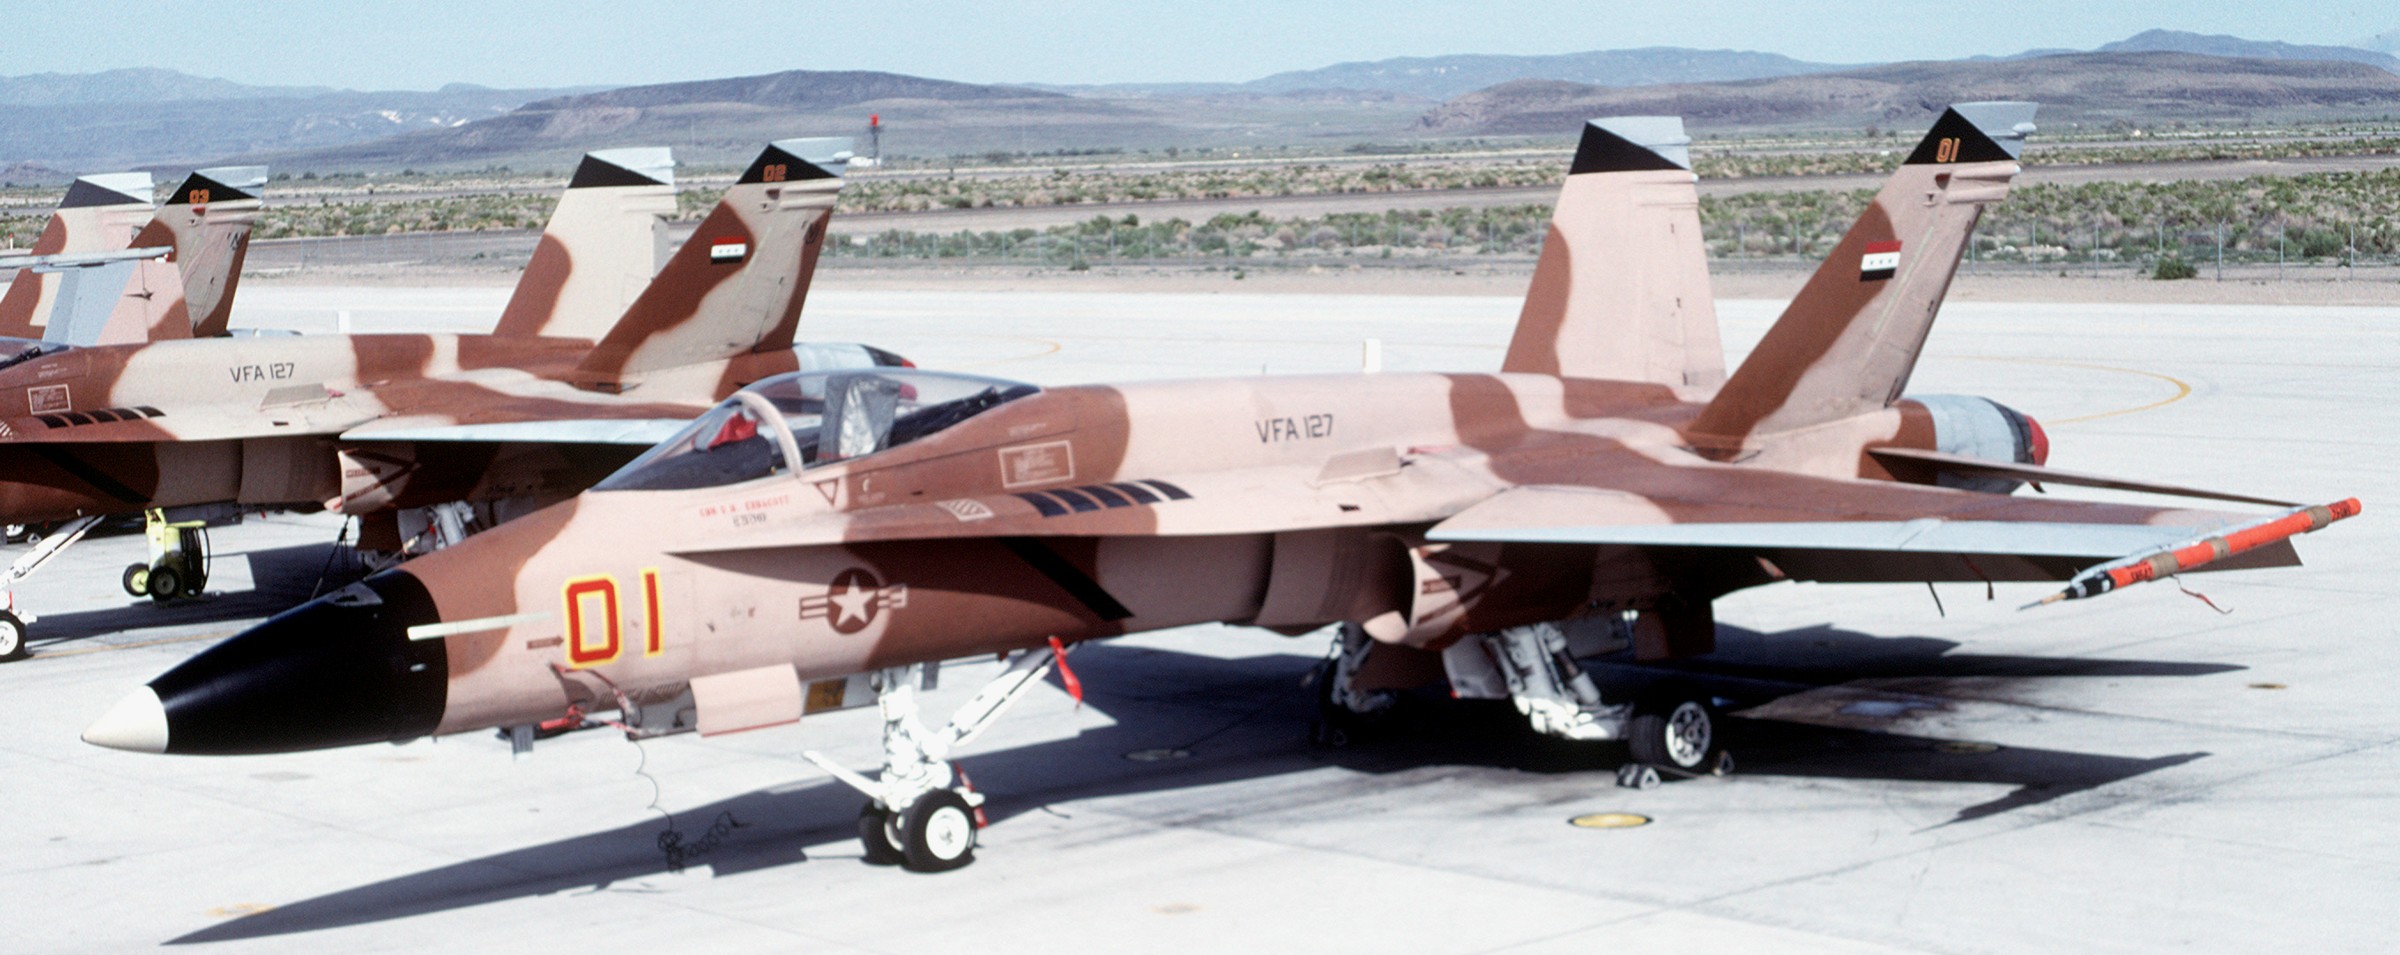 vfa-127 desert bogeys strike fighter squadron f/a-18a hornet 1993 06 fleet adversary